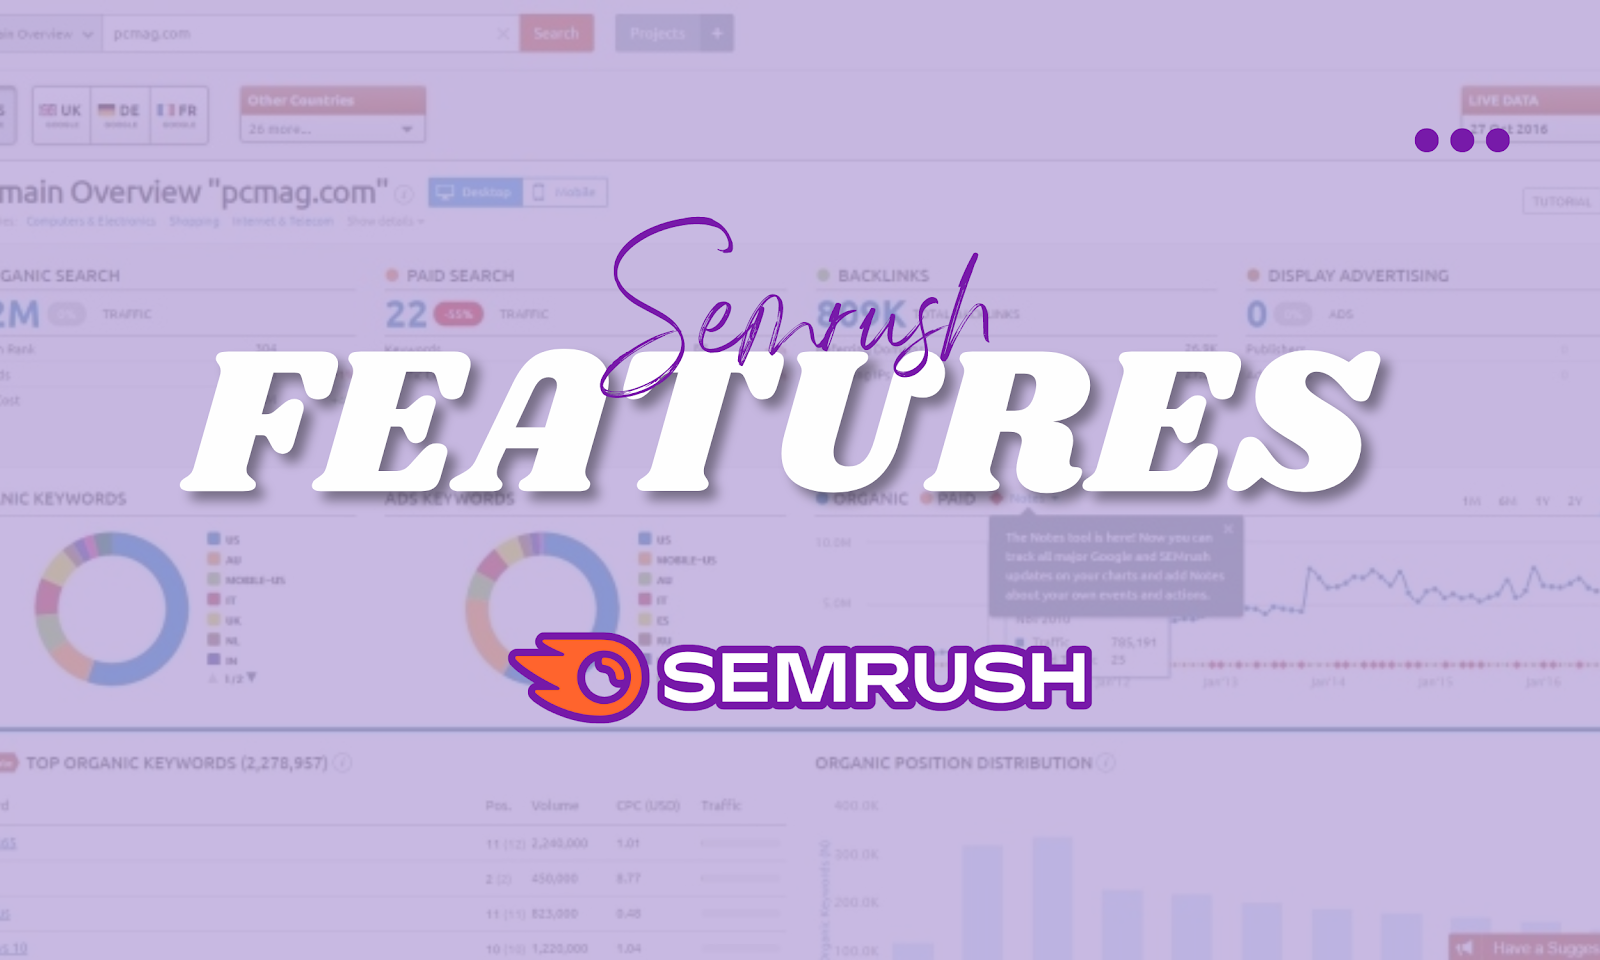 Semrush: SEO Tools, A Review Softlist.io